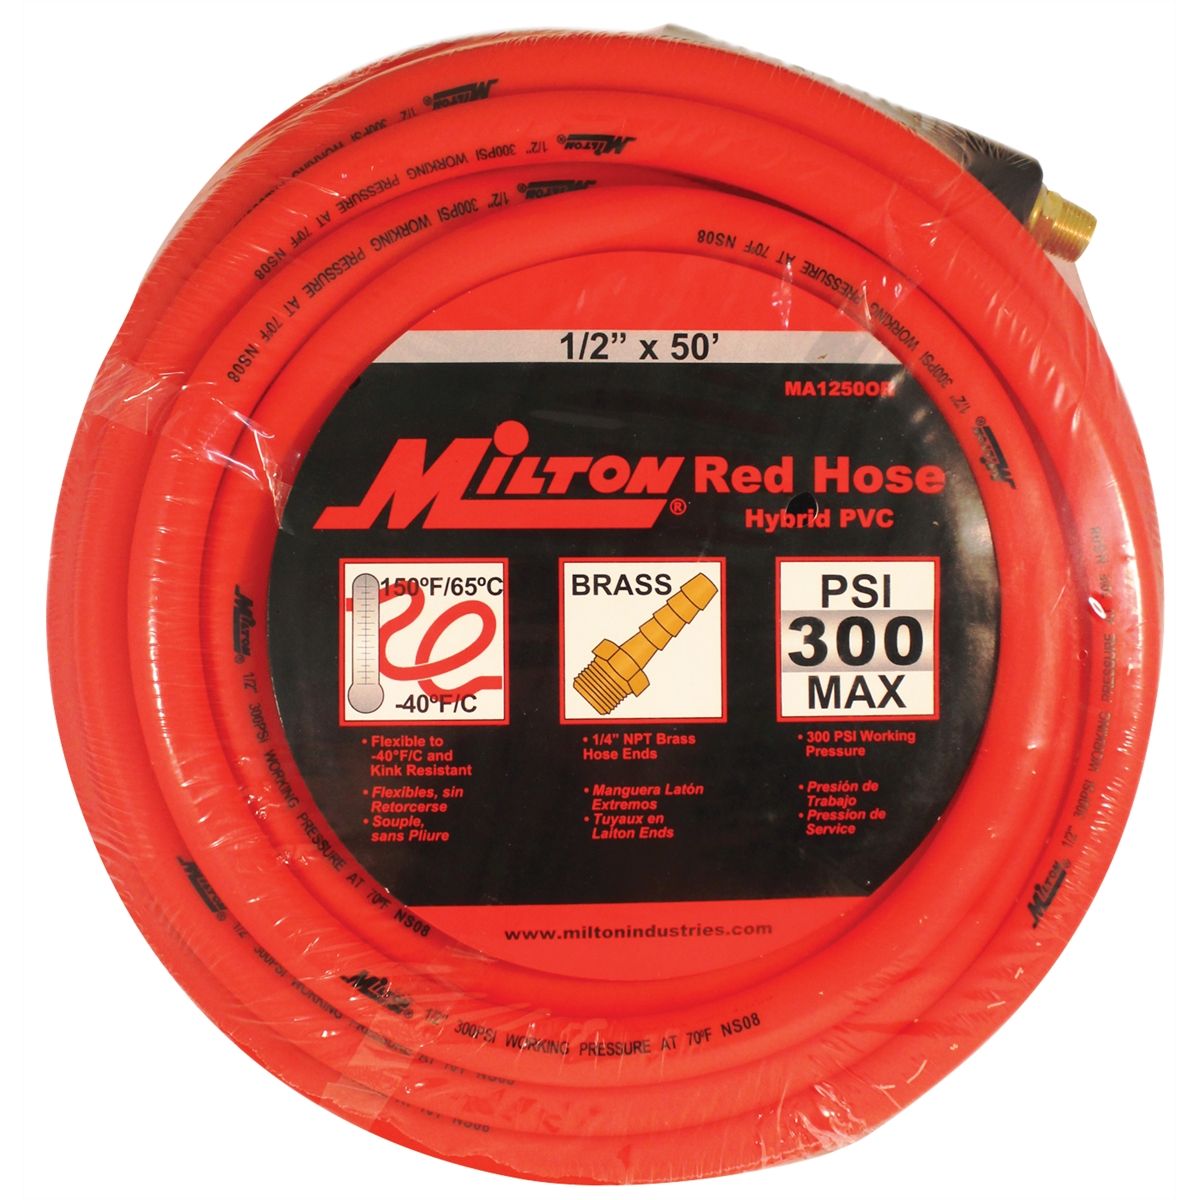 Milton Red Hose PU Hybrid 1/2" X 50' w/1/4" NPT